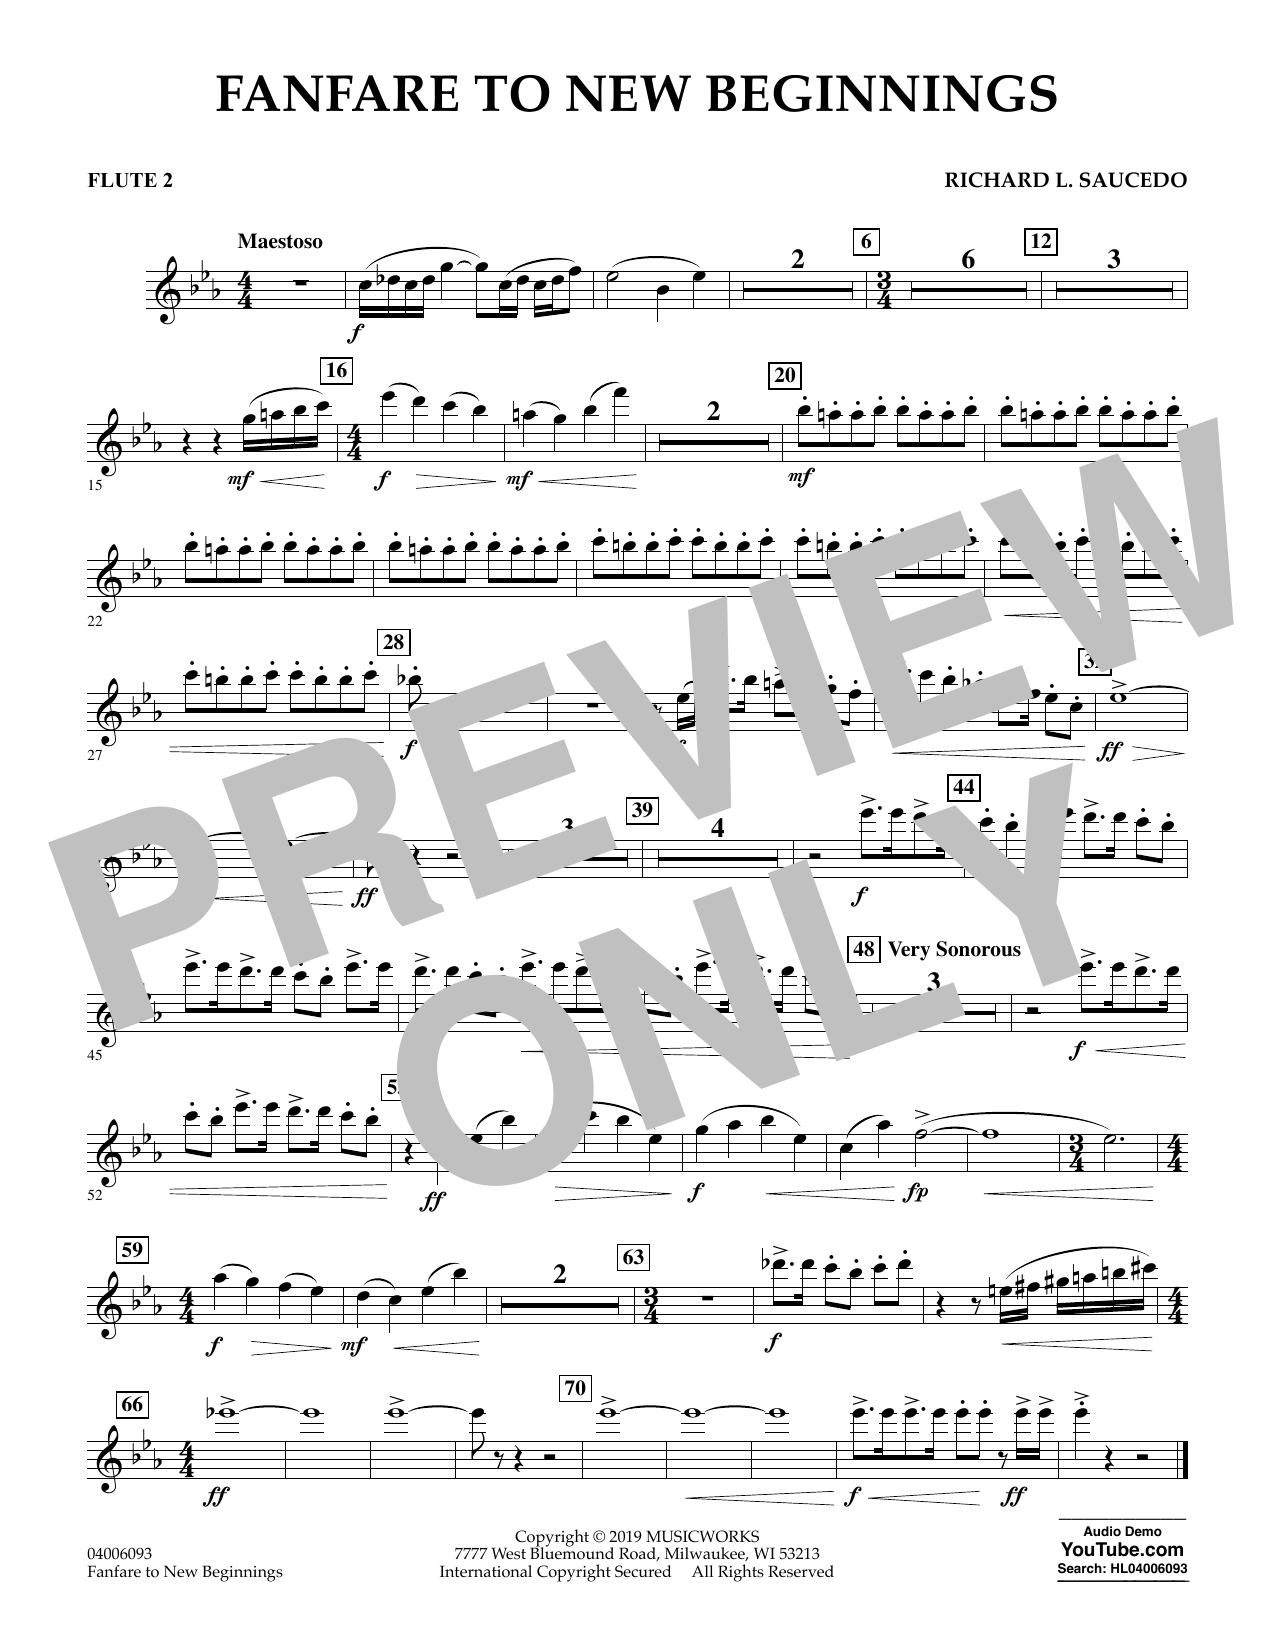 Download Richard L. Saucedo Fanfare for New Beginnings - Flute 2 Sheet Music